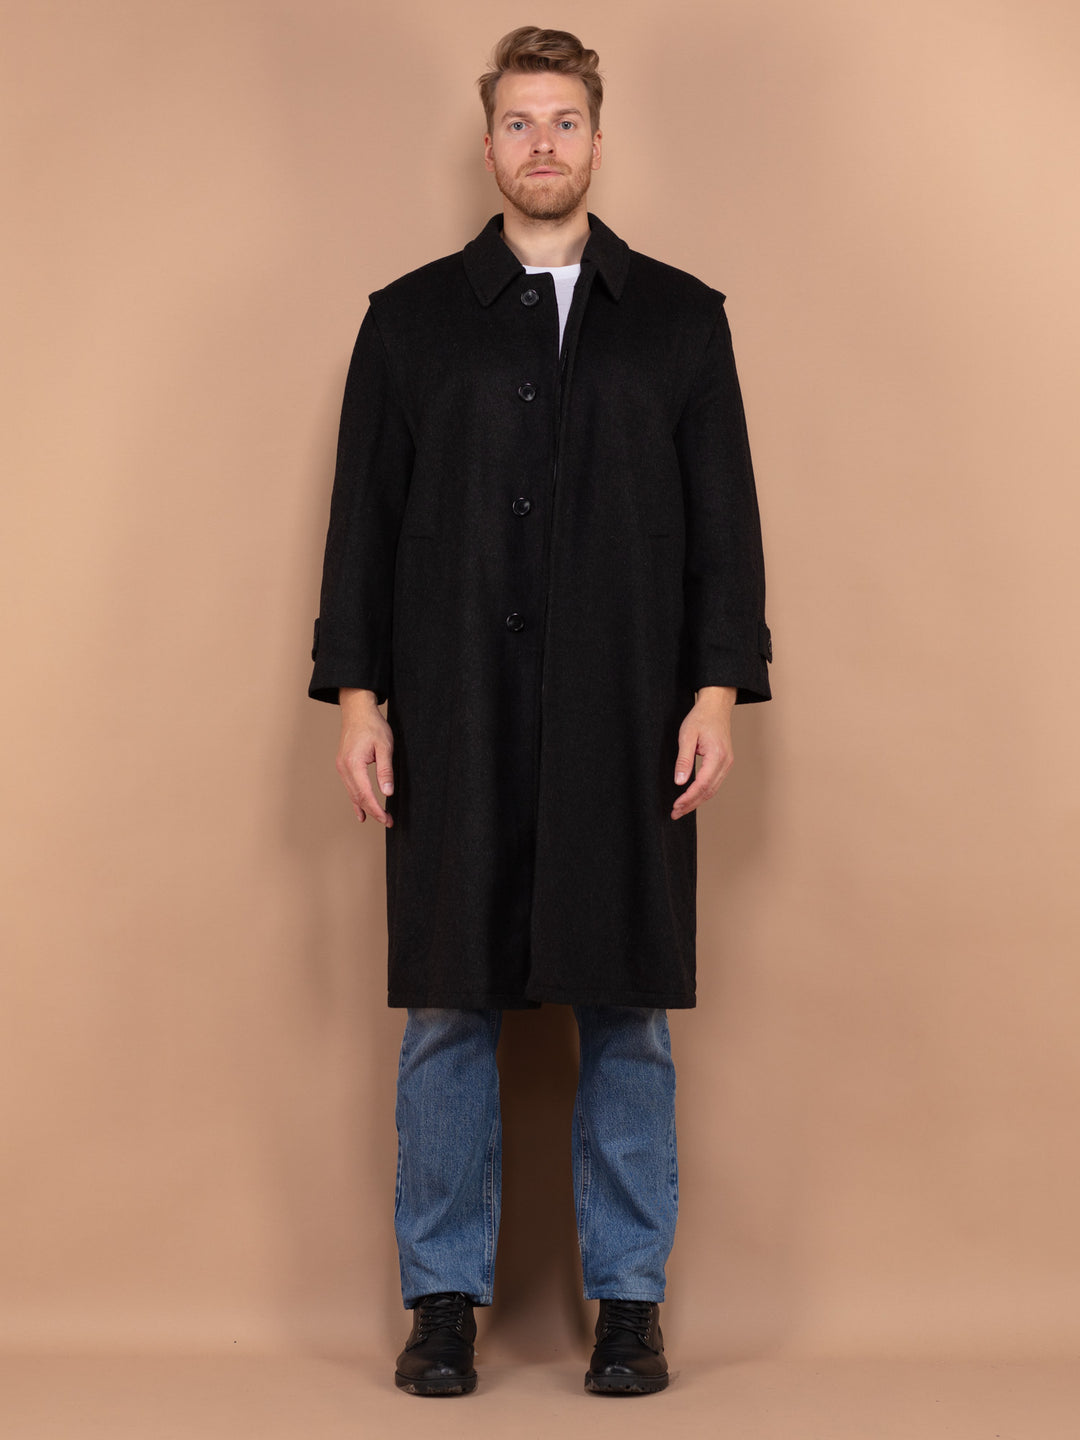 Wool Overcoat Men, Loden Coat In Black Size L, Vintage Wool Coat, Autumn Wool Coat, 1980s Coat, Minimalist Coat, Men Vintage Outerwear